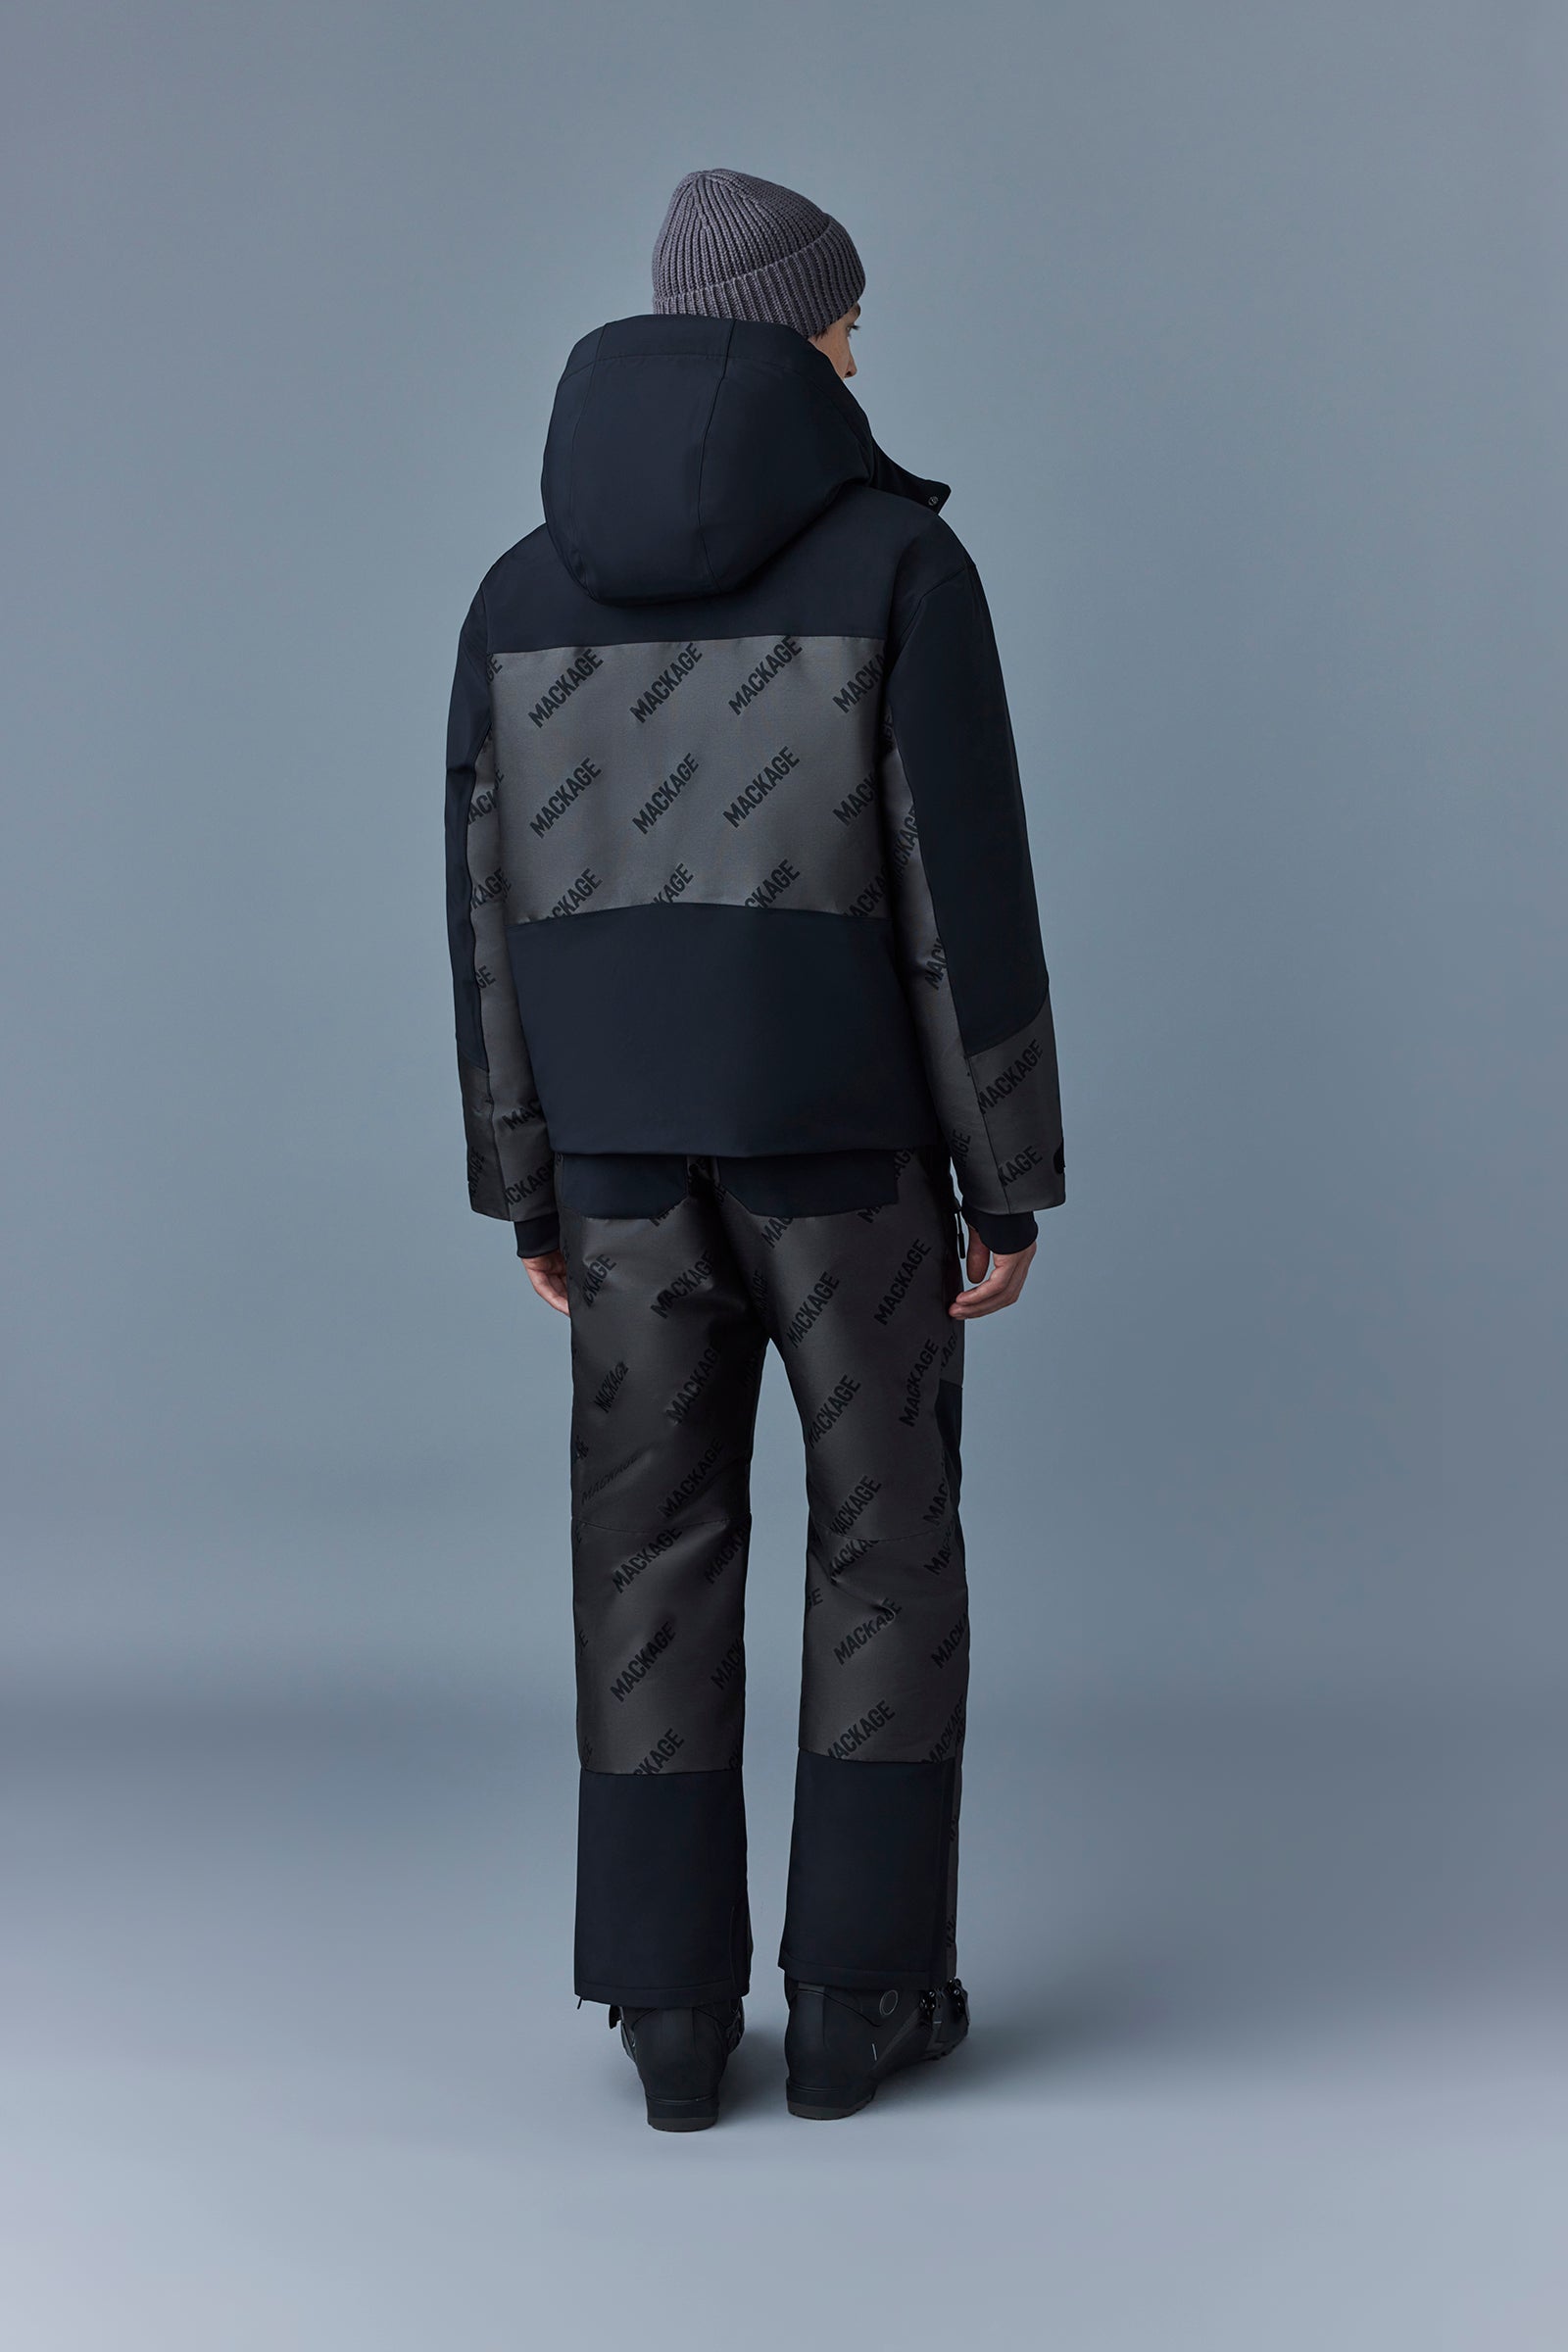 Louis Vuitton 2054 Monogram Windbreaker Jacket Virgil Zip in Black, Men's (Size XL)